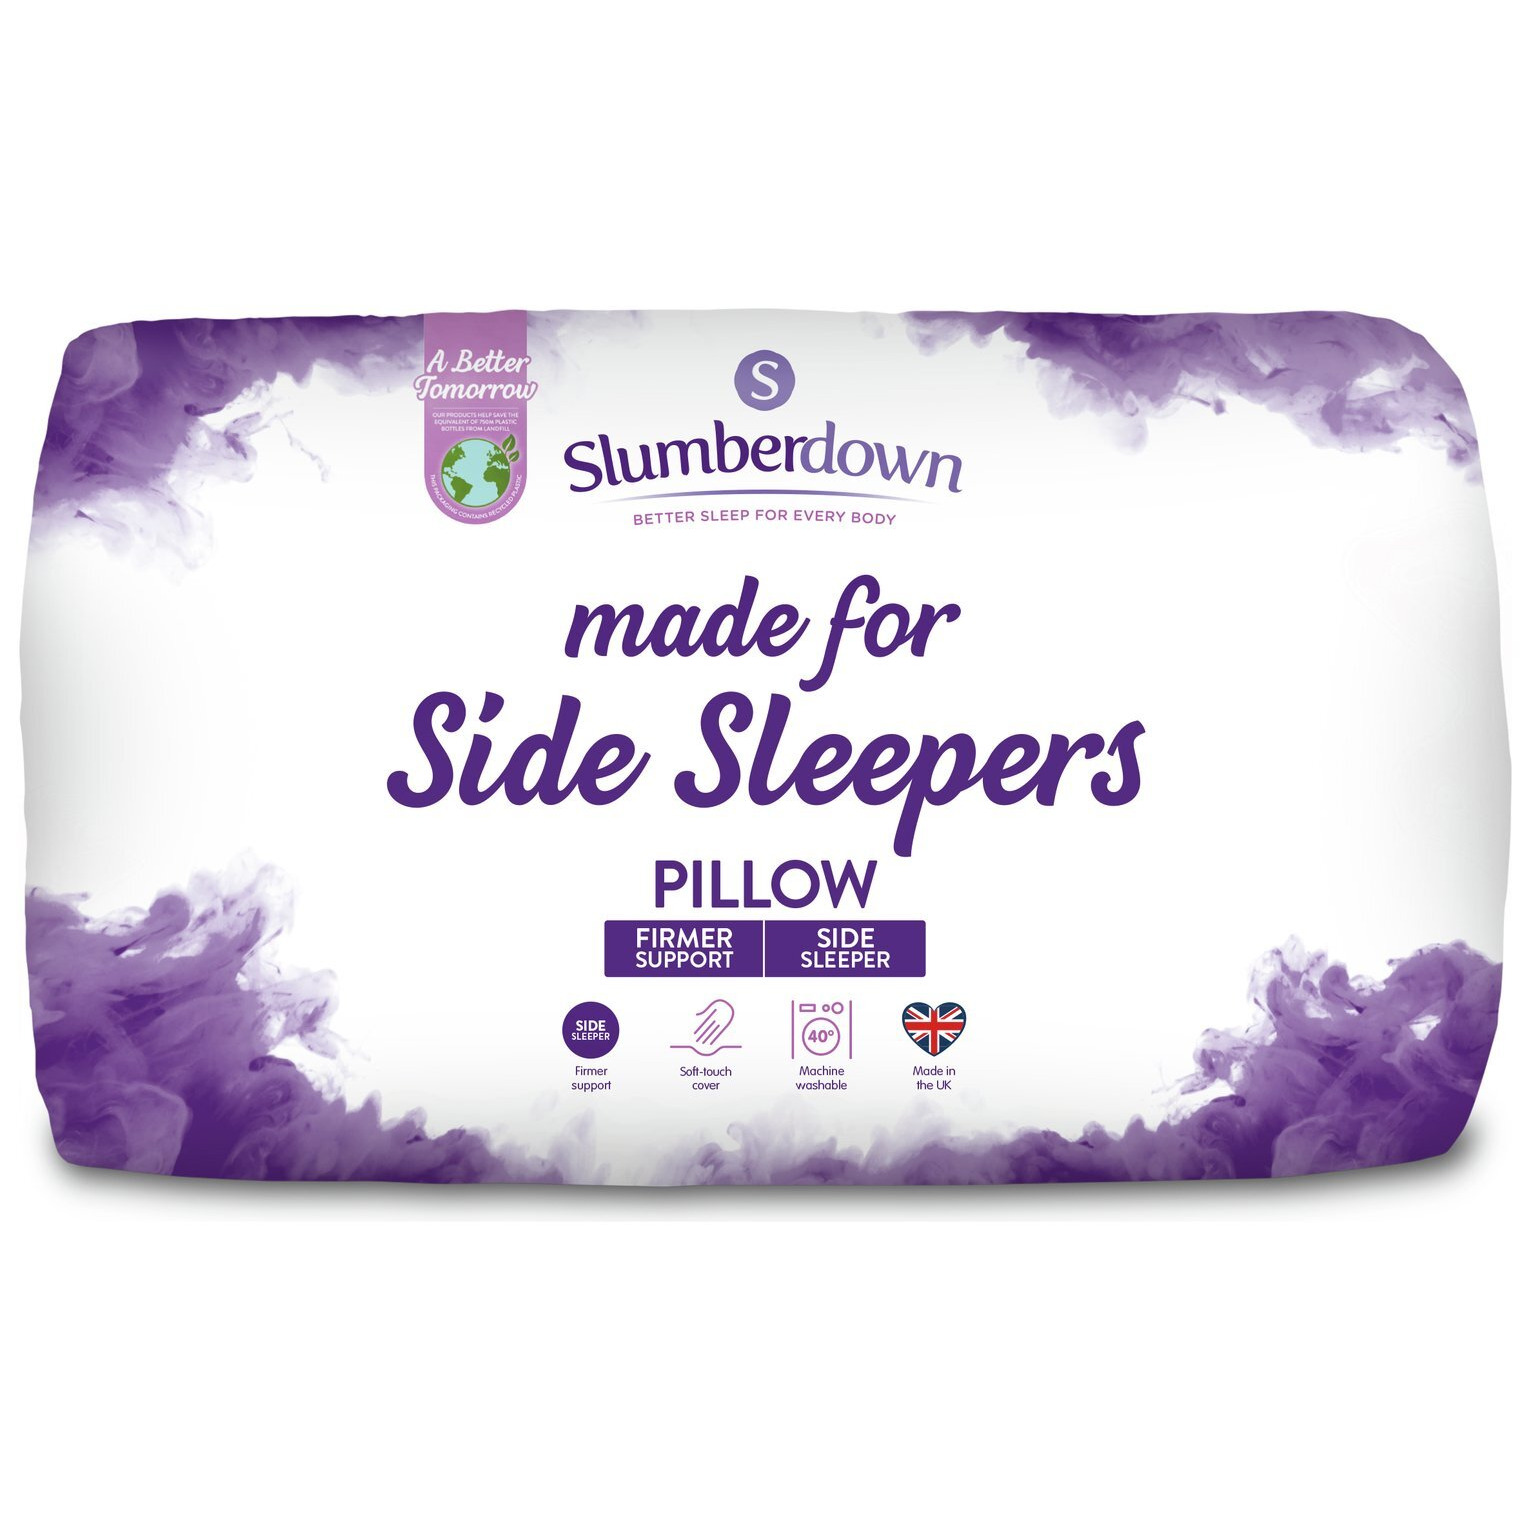 Slumberdown Firm Support Side Sleeper Pillow - image 1